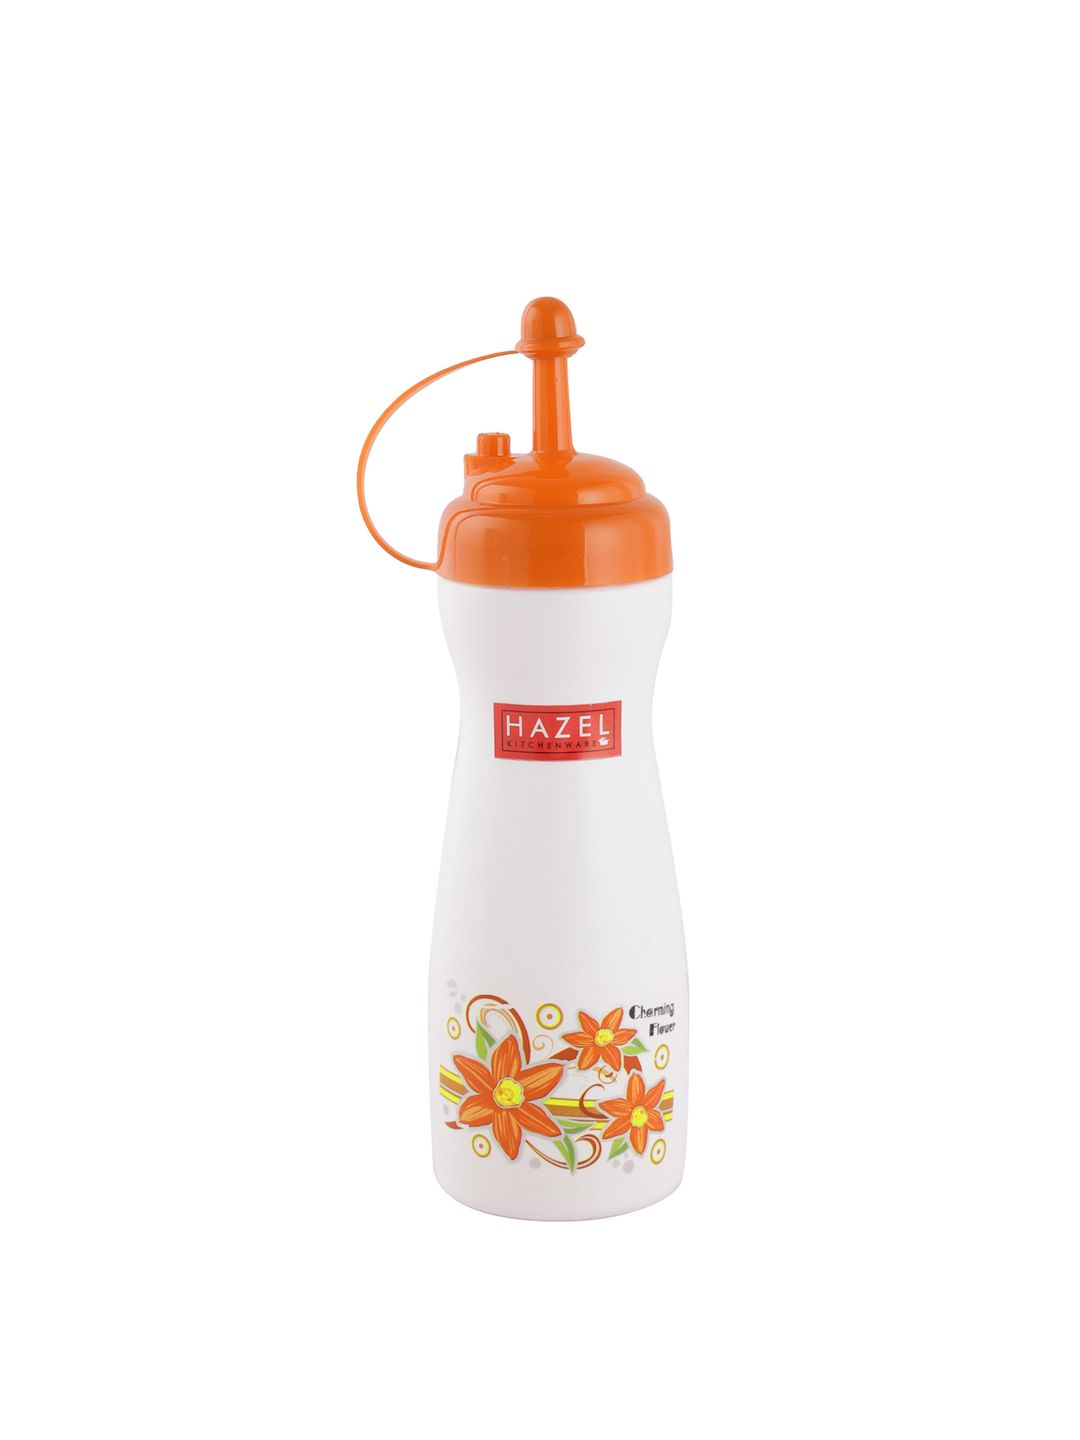 HAZEL White & Orange Sauce Bottle Dispenser Price in India